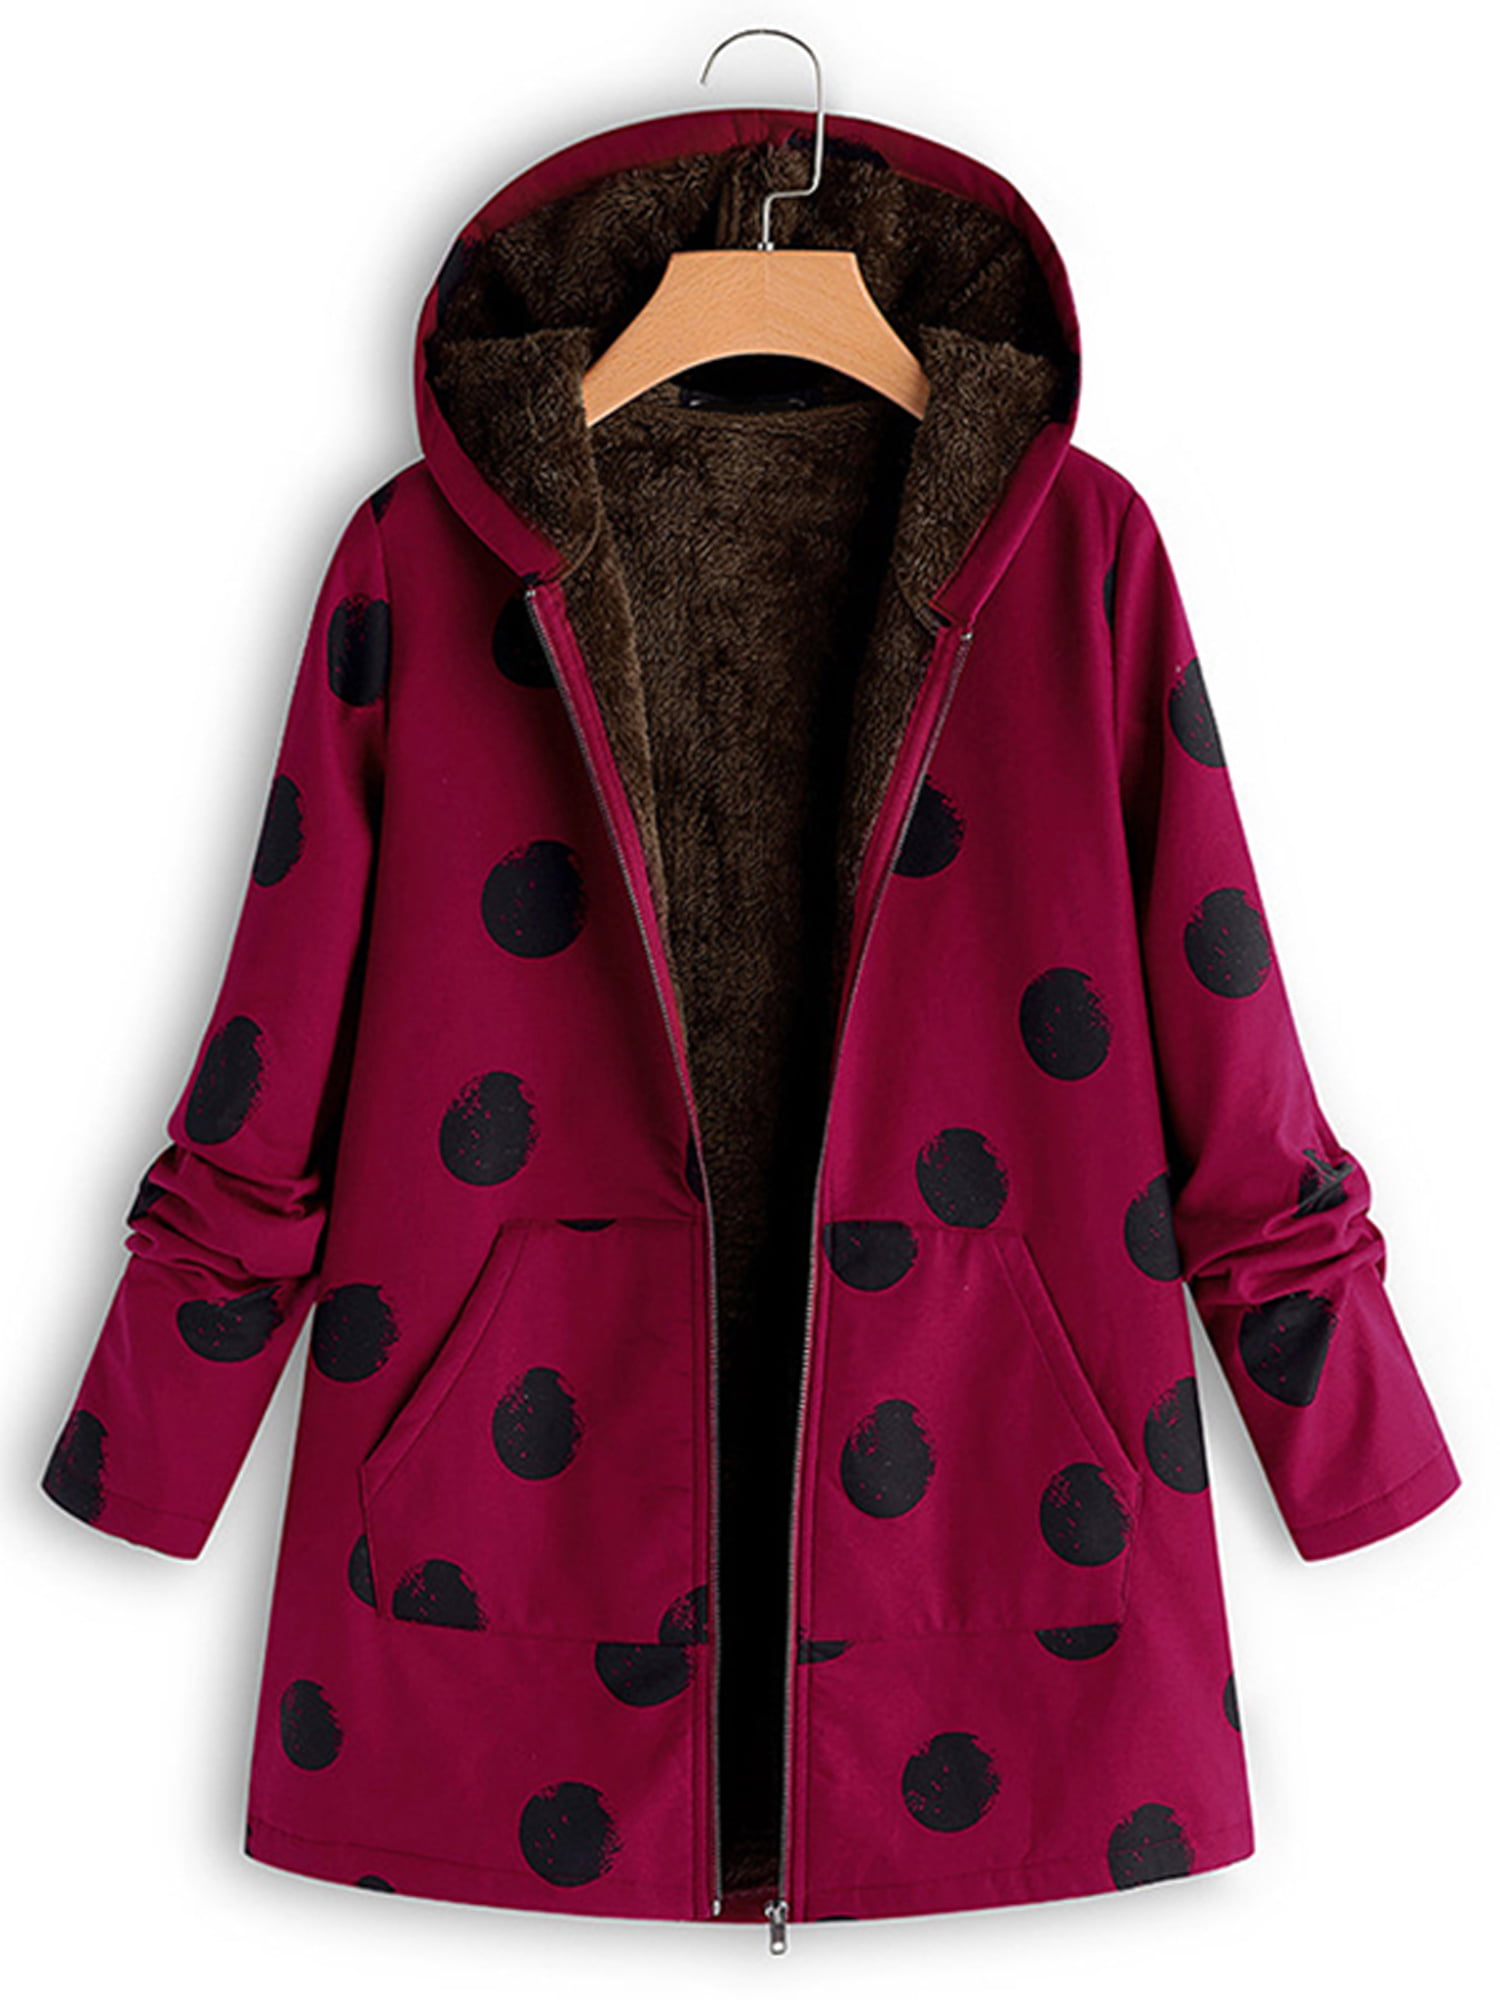 Lallc - Women's Winter Warm Plus Size Cardigan Spotted Hooded Coat ...